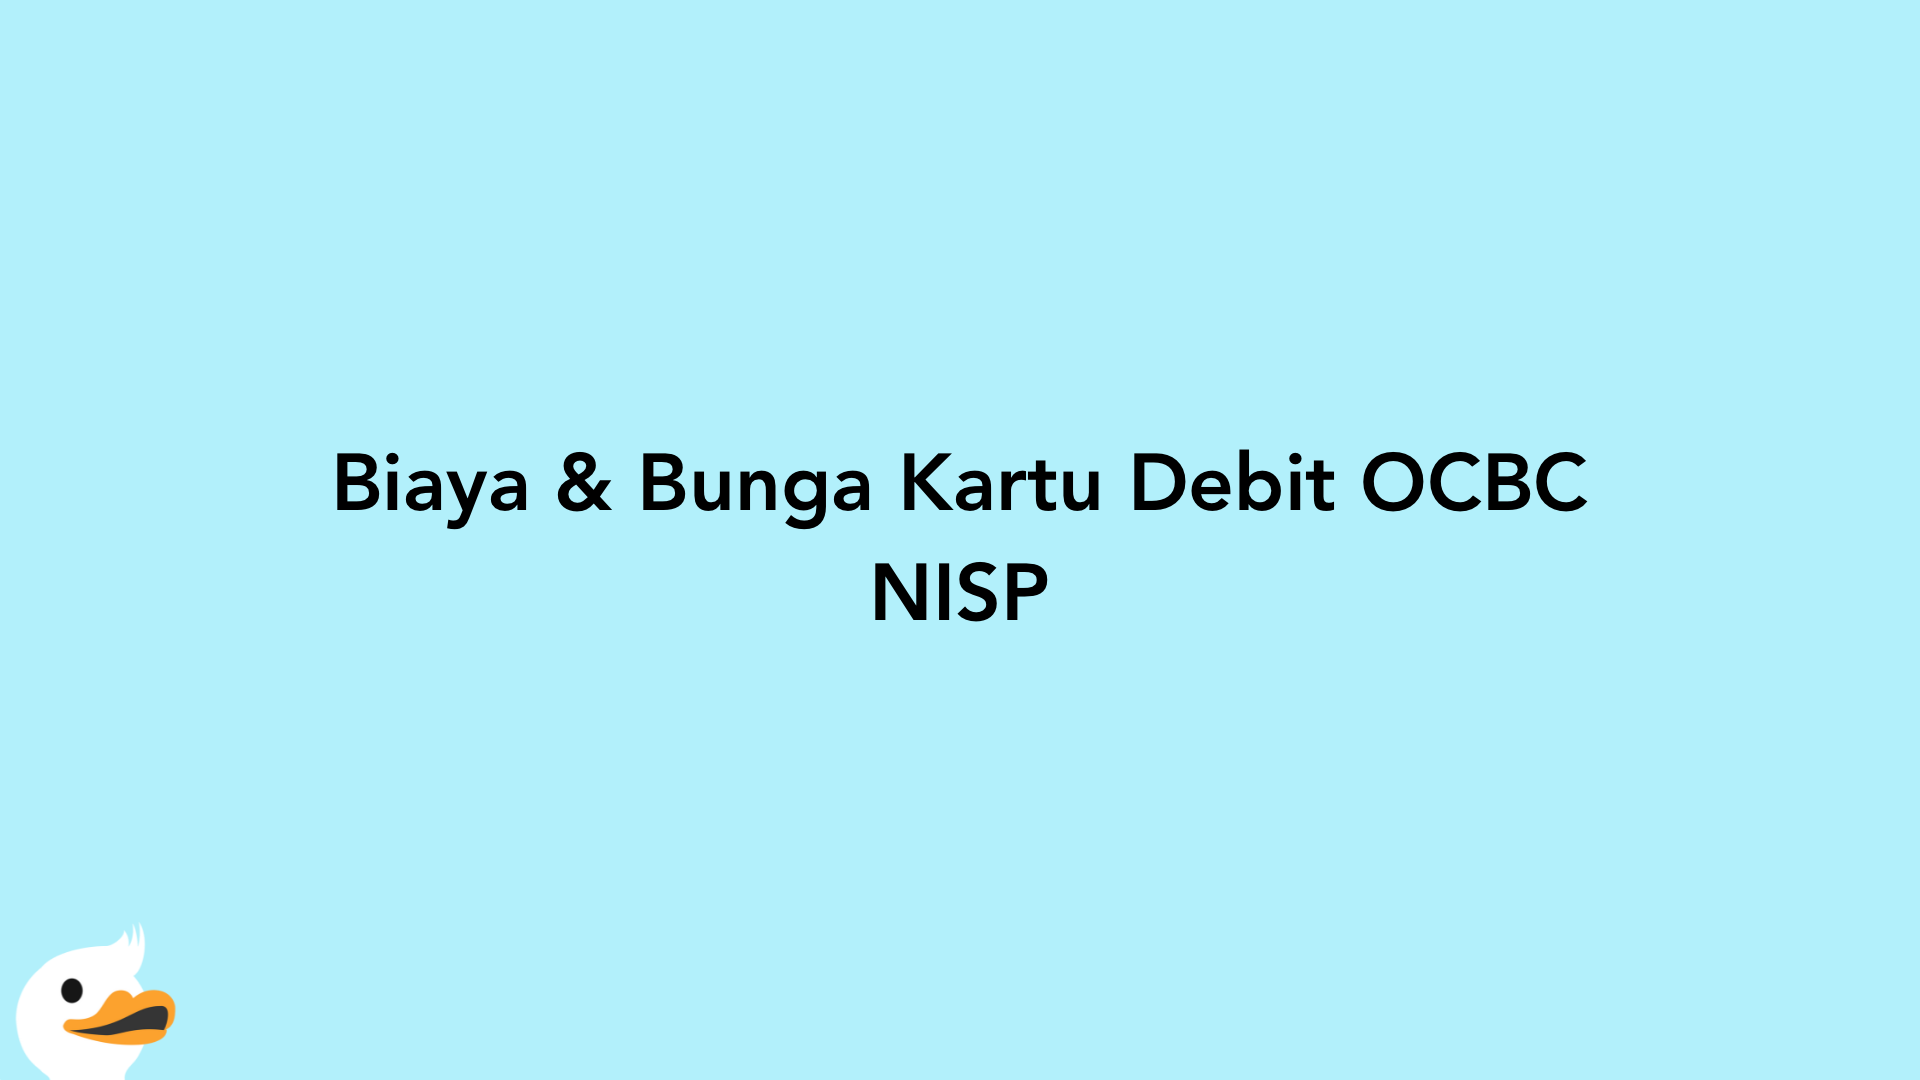 Biaya & Bunga Kartu Debit OCBC NISP